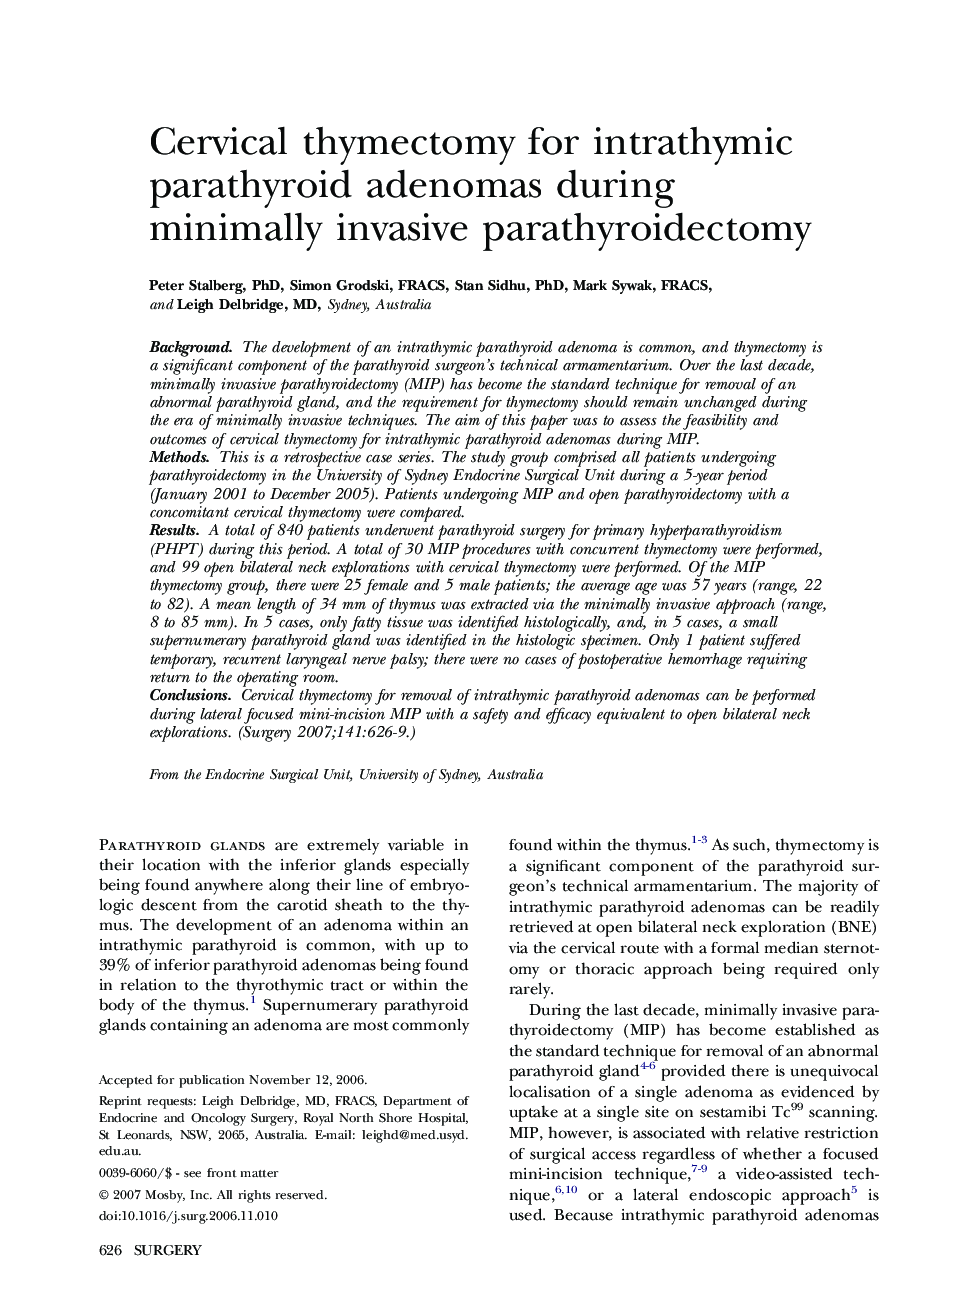 Cervical thymectomy for intrathymic parathyroid adenomas during minimally invasive parathyroidectomy